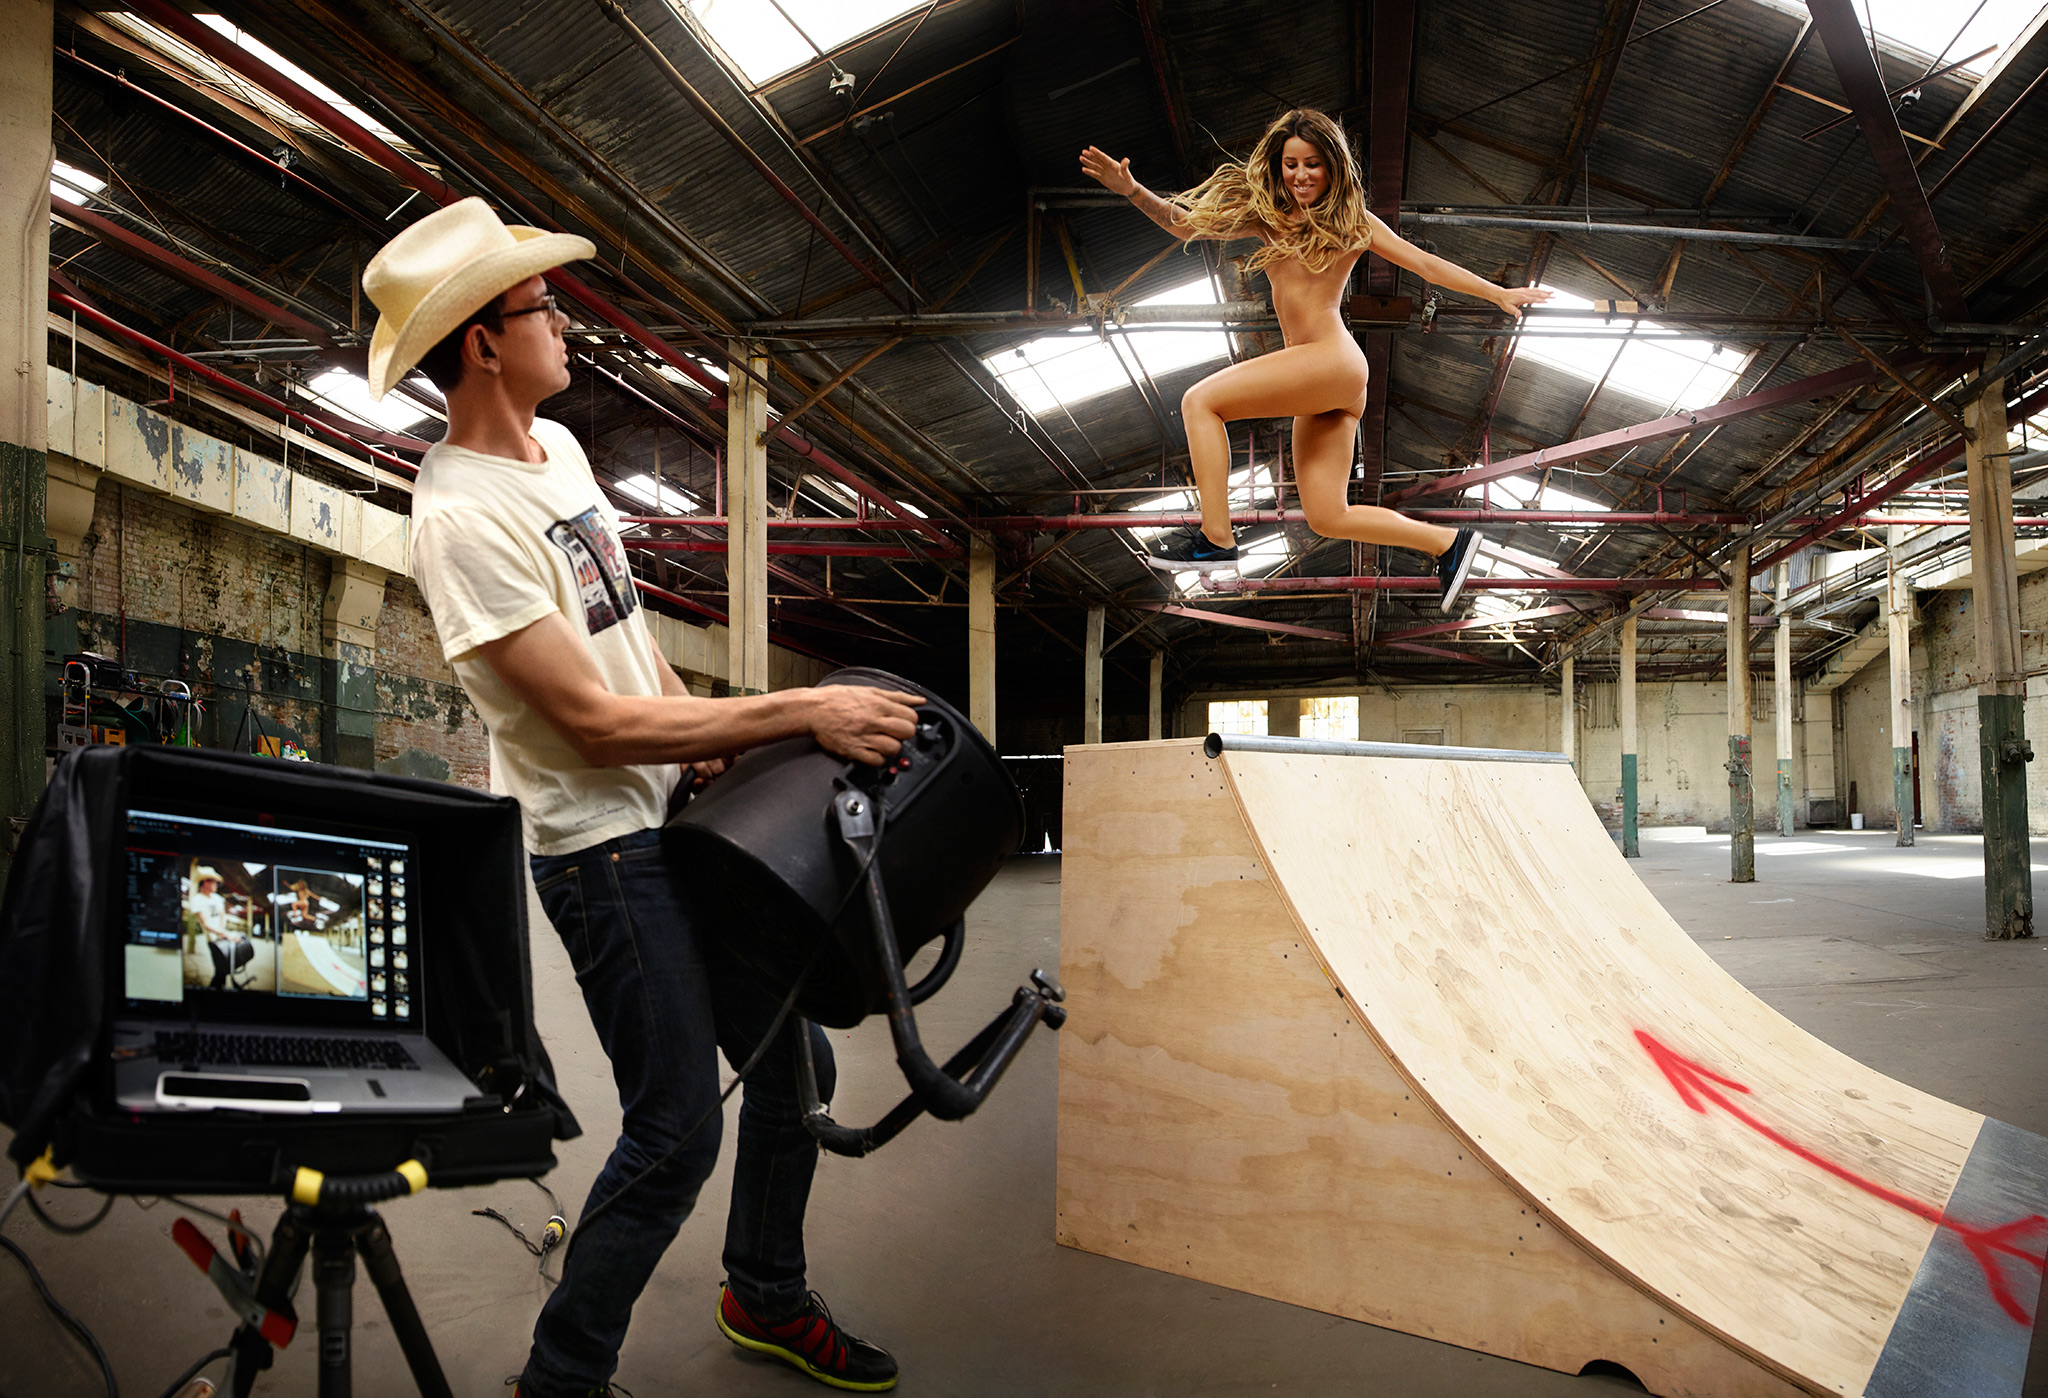 Inside an L.A. warehouse, pro skateboarder Leticia Bufoni runs up a skate r...